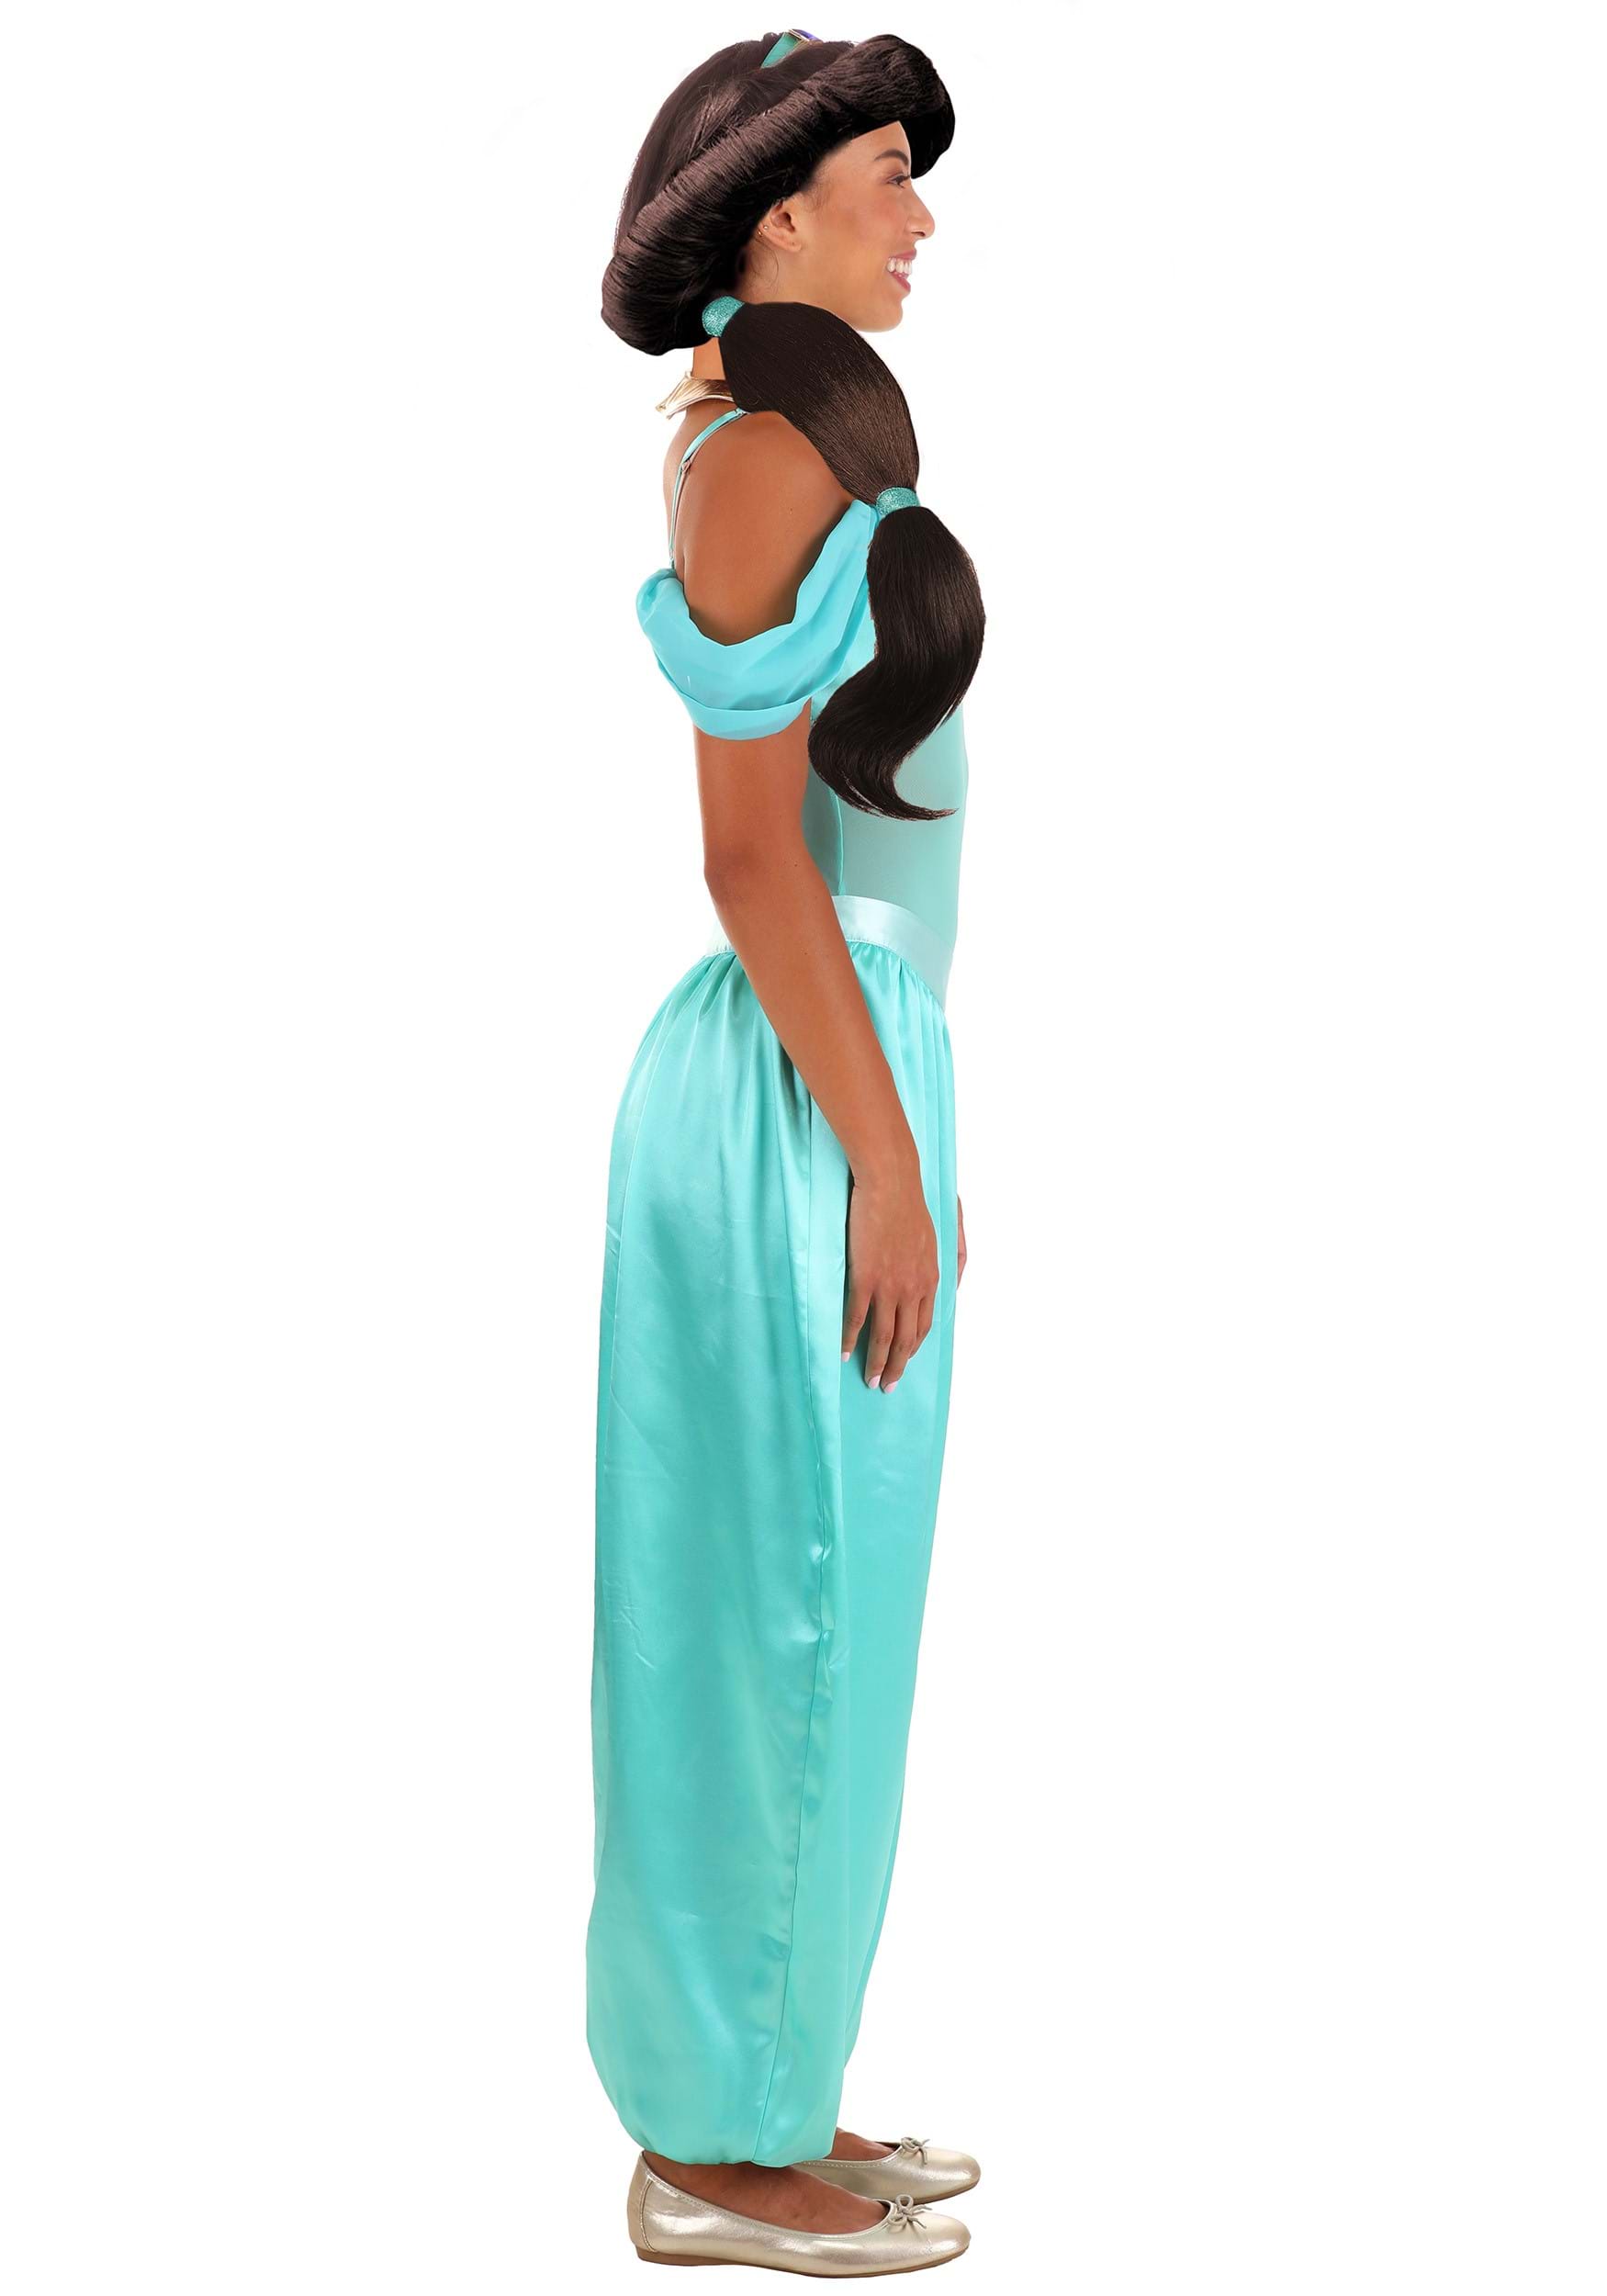 Top 5 Disney Themed Halloween Costume Ideas for Women & Men  Aladdin  costume, Aladdin costume diy, Themed halloween costumes